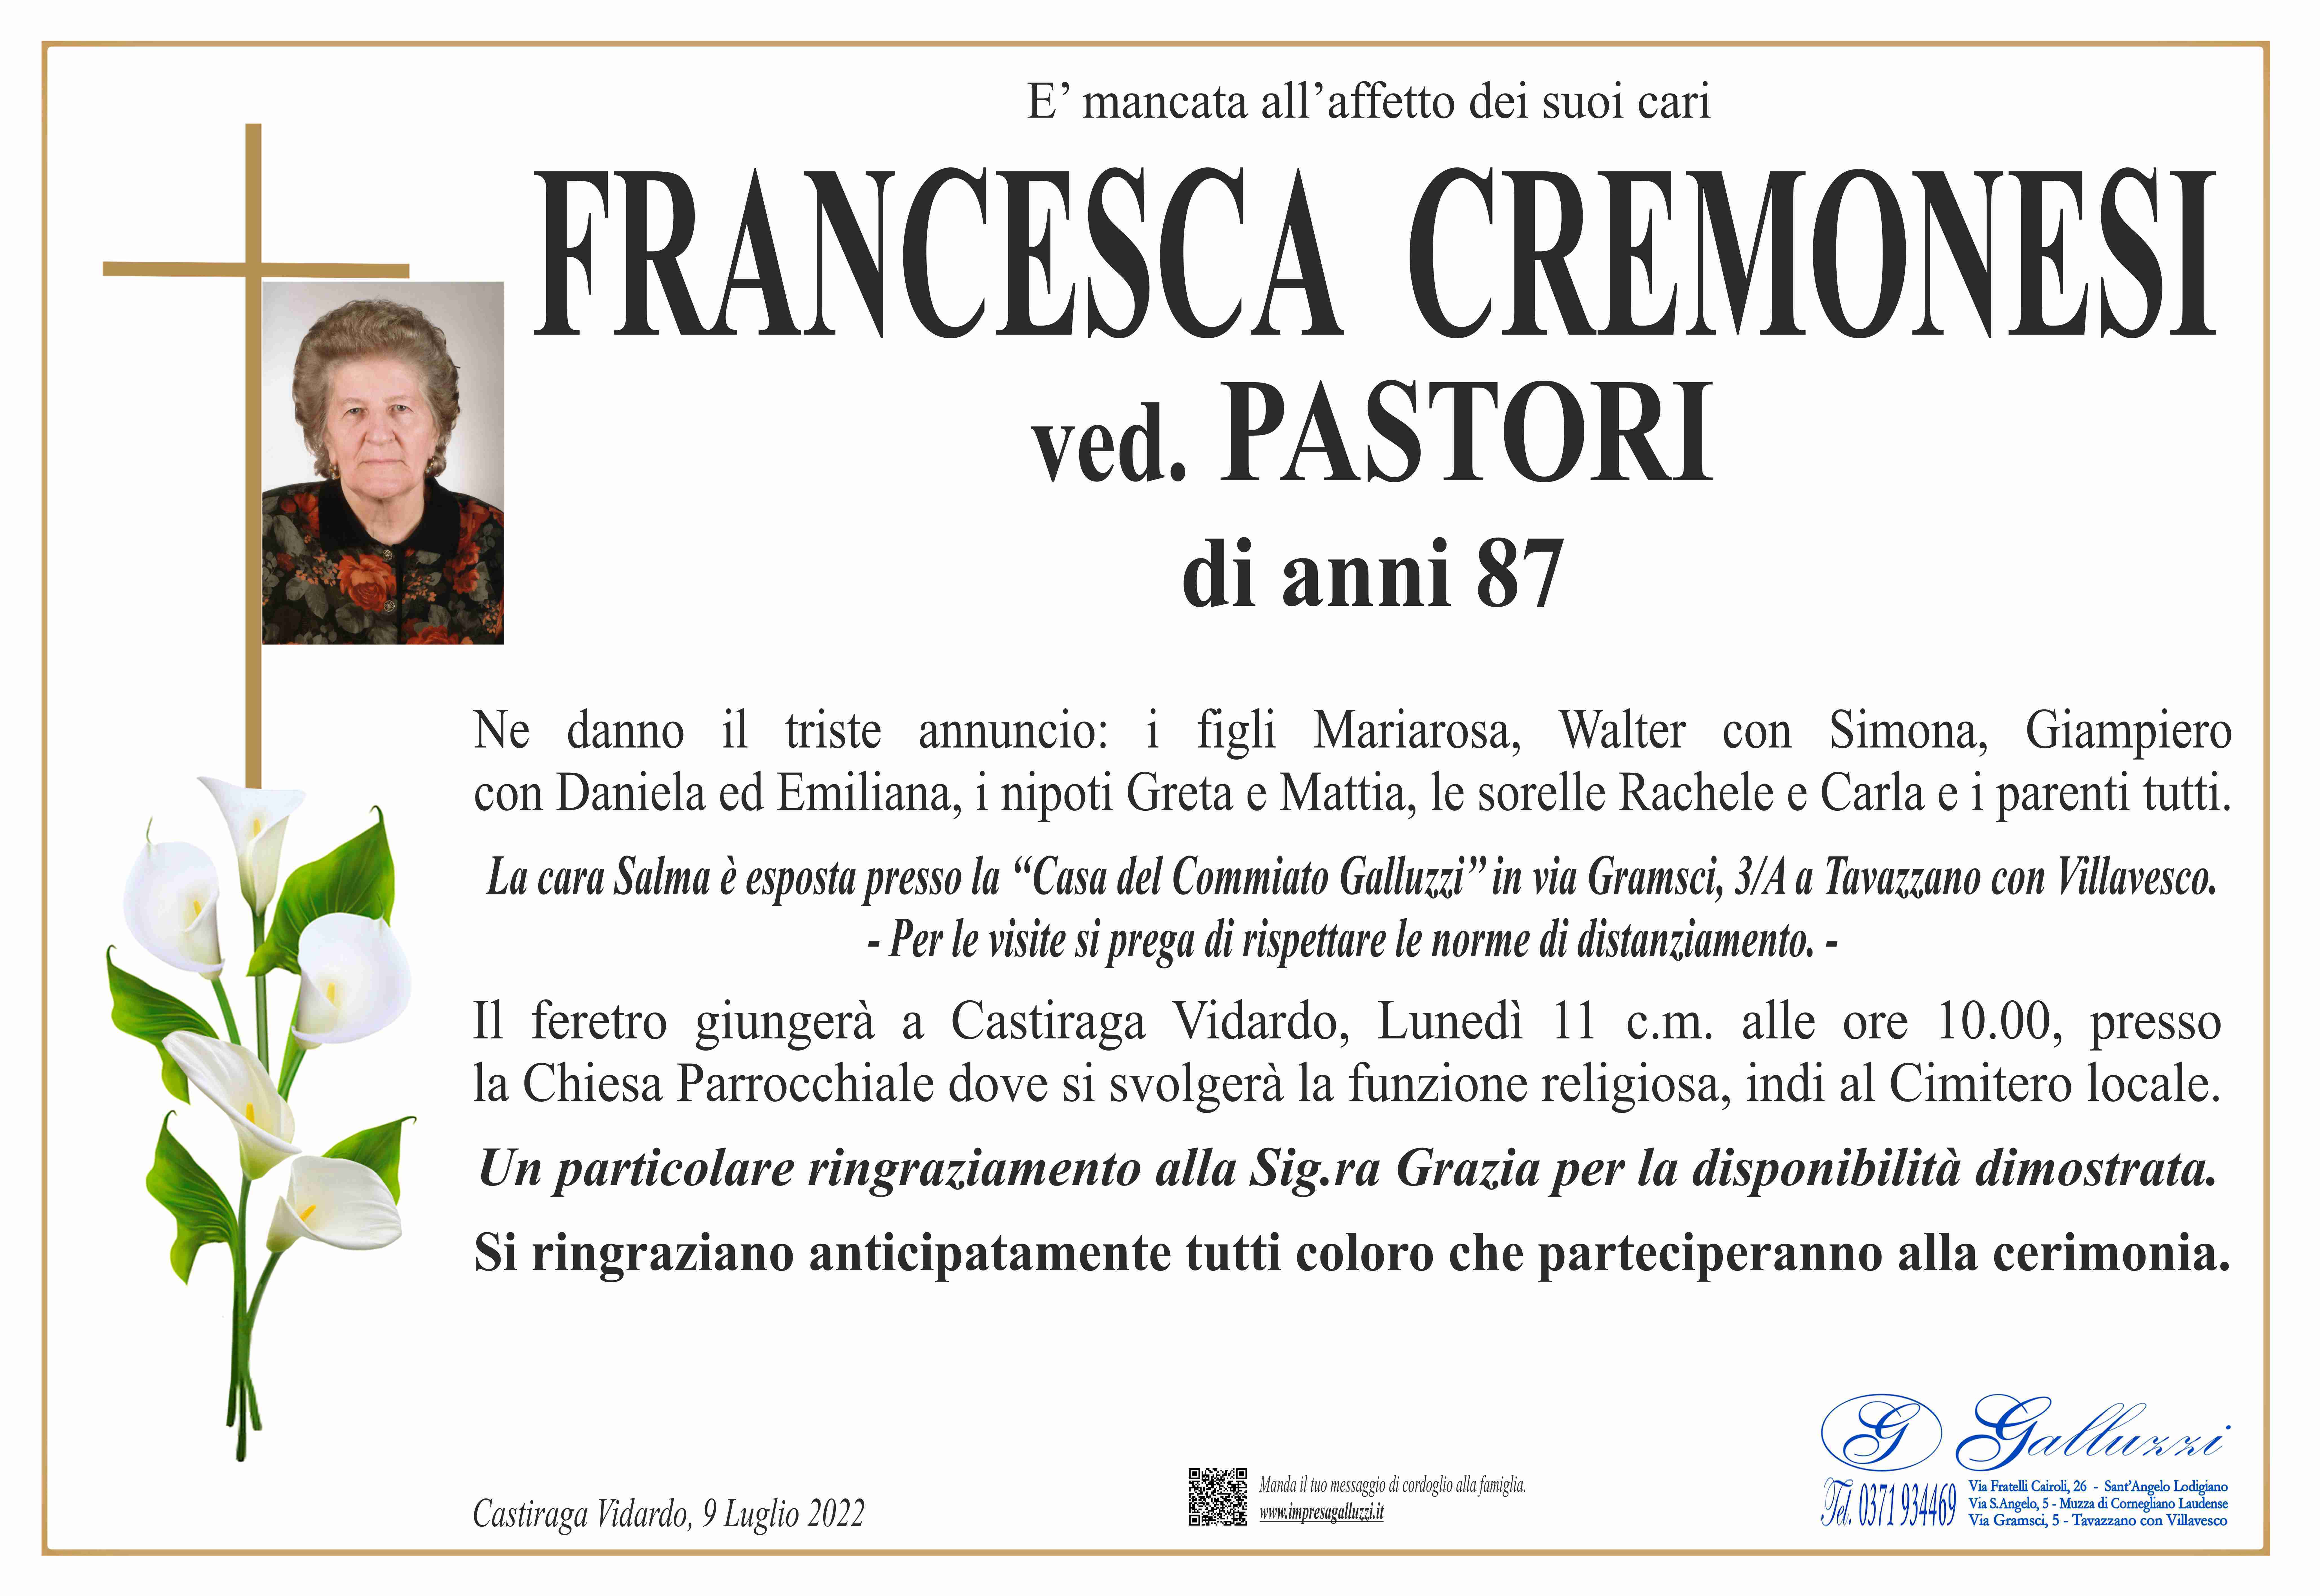 Francesca Cremonesi